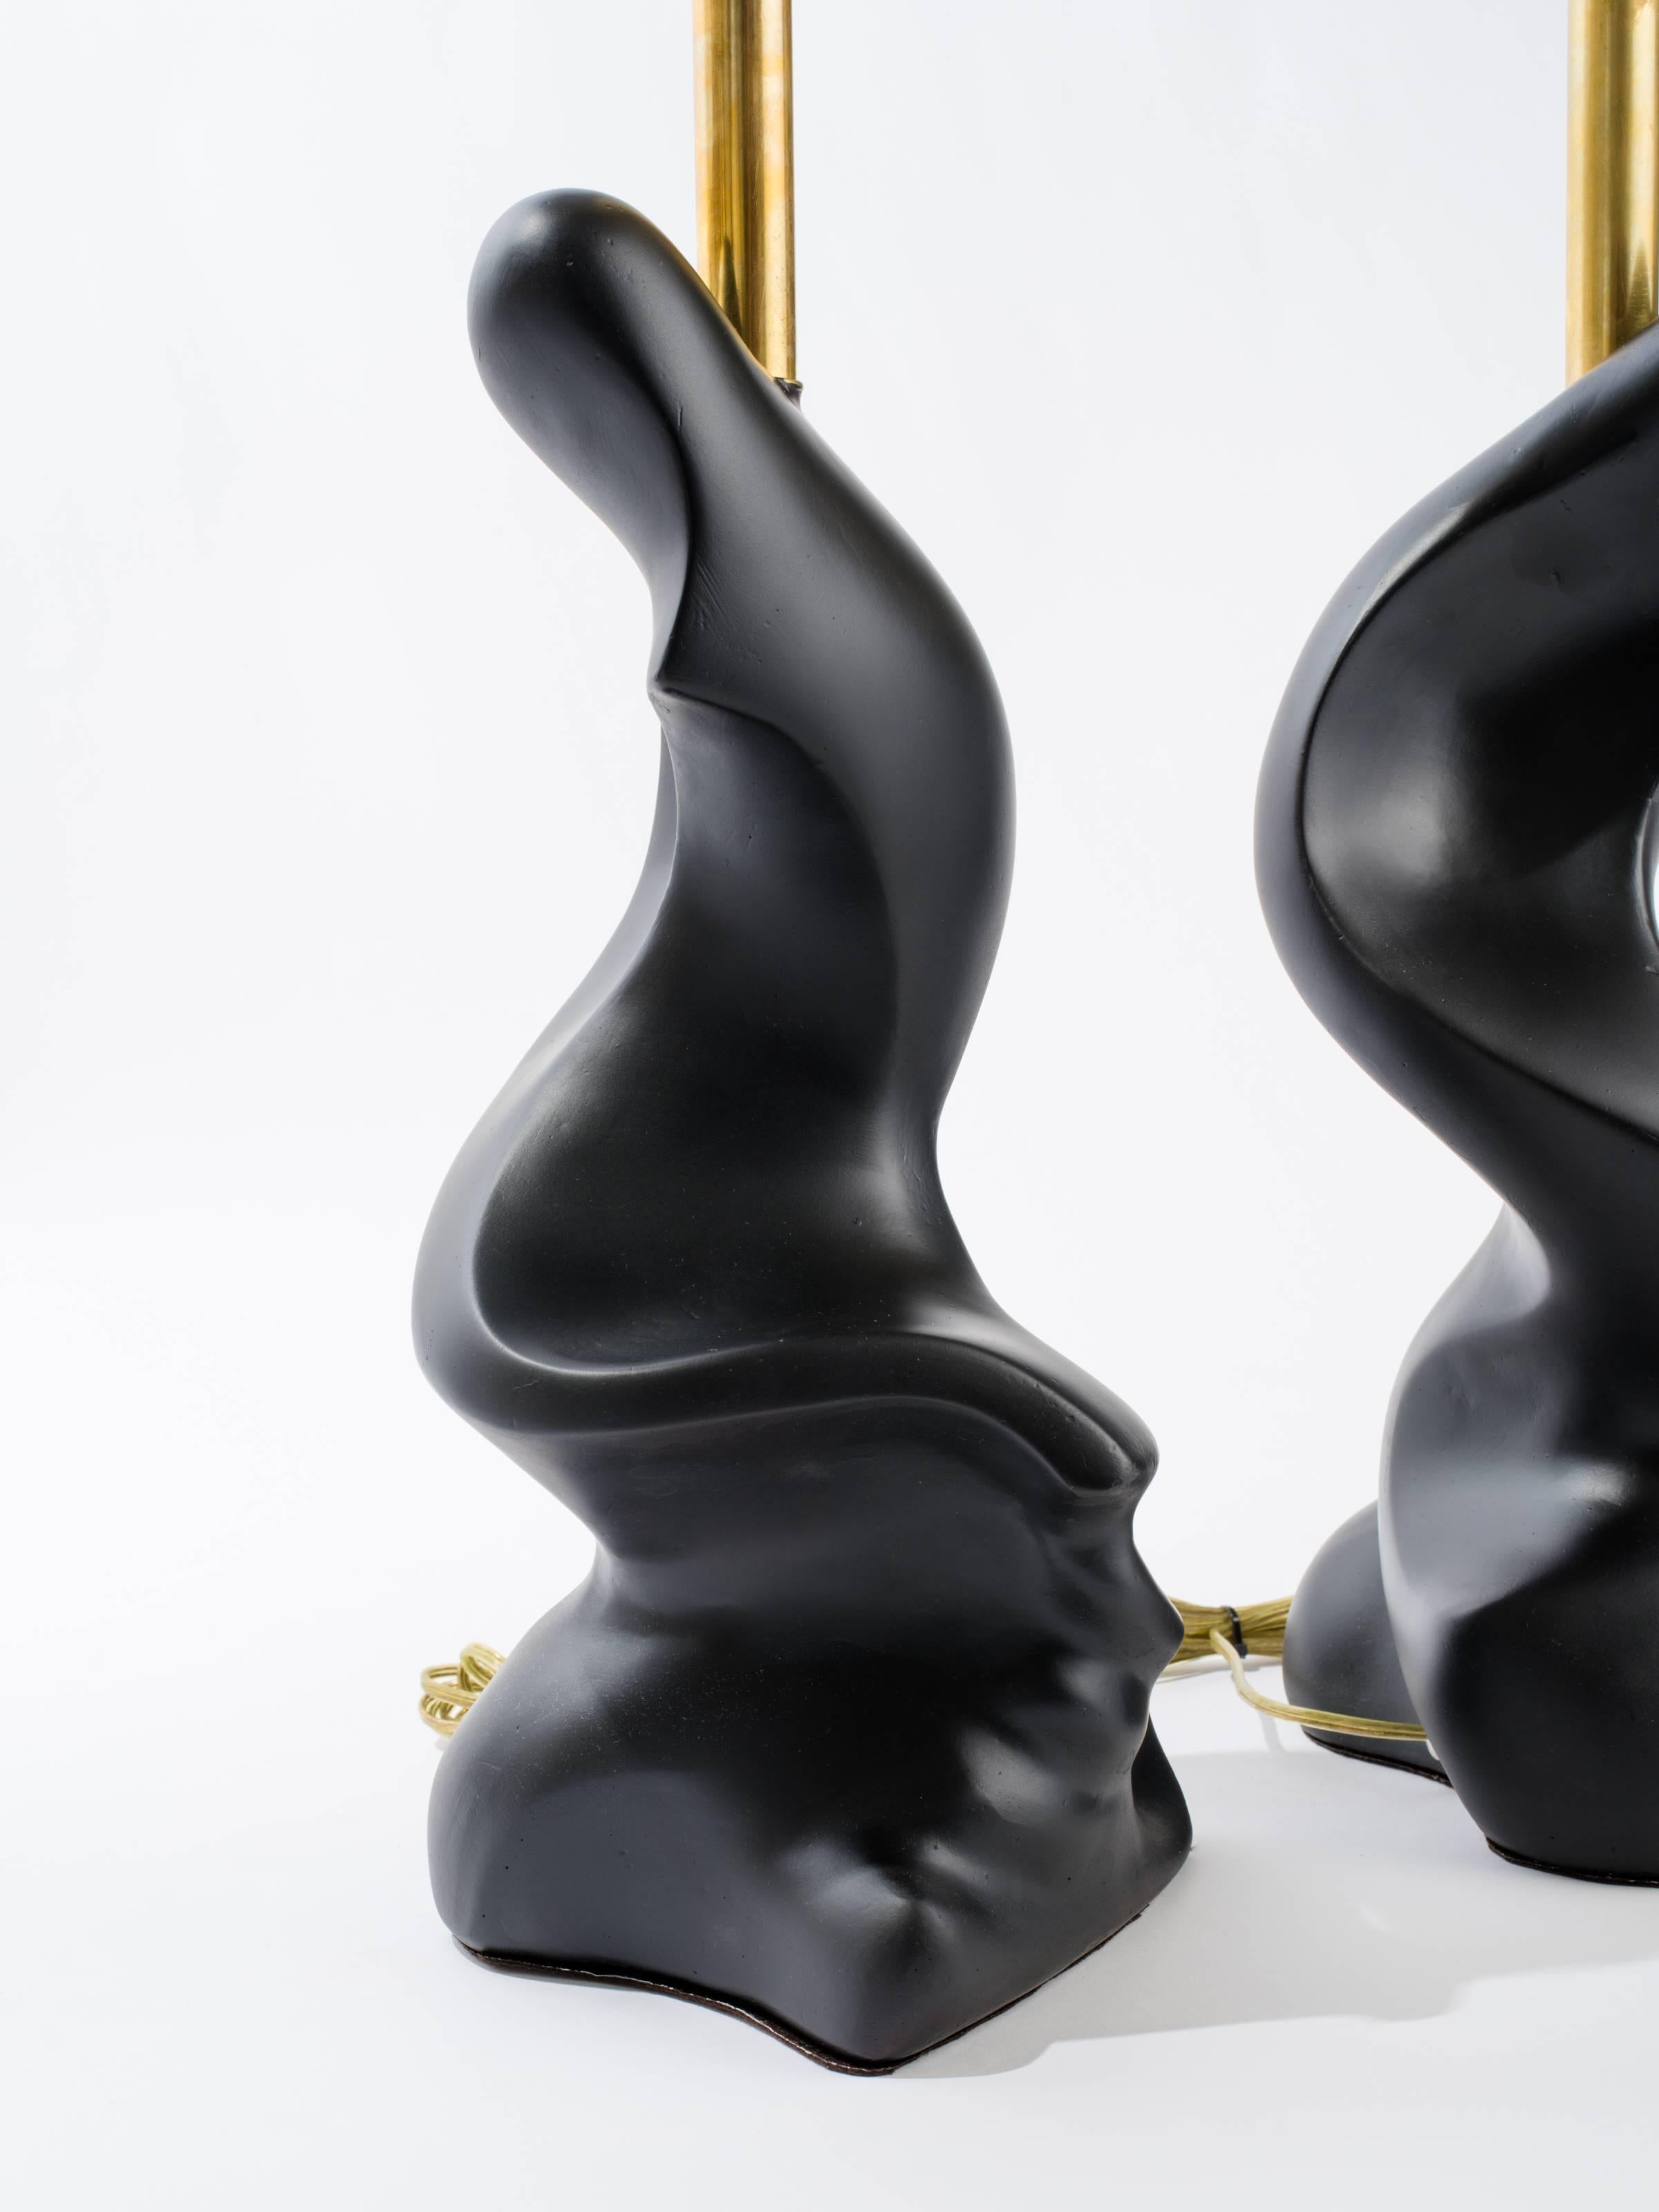 Molded Amorphic Black Sculpture Plaster Lamps For Sale